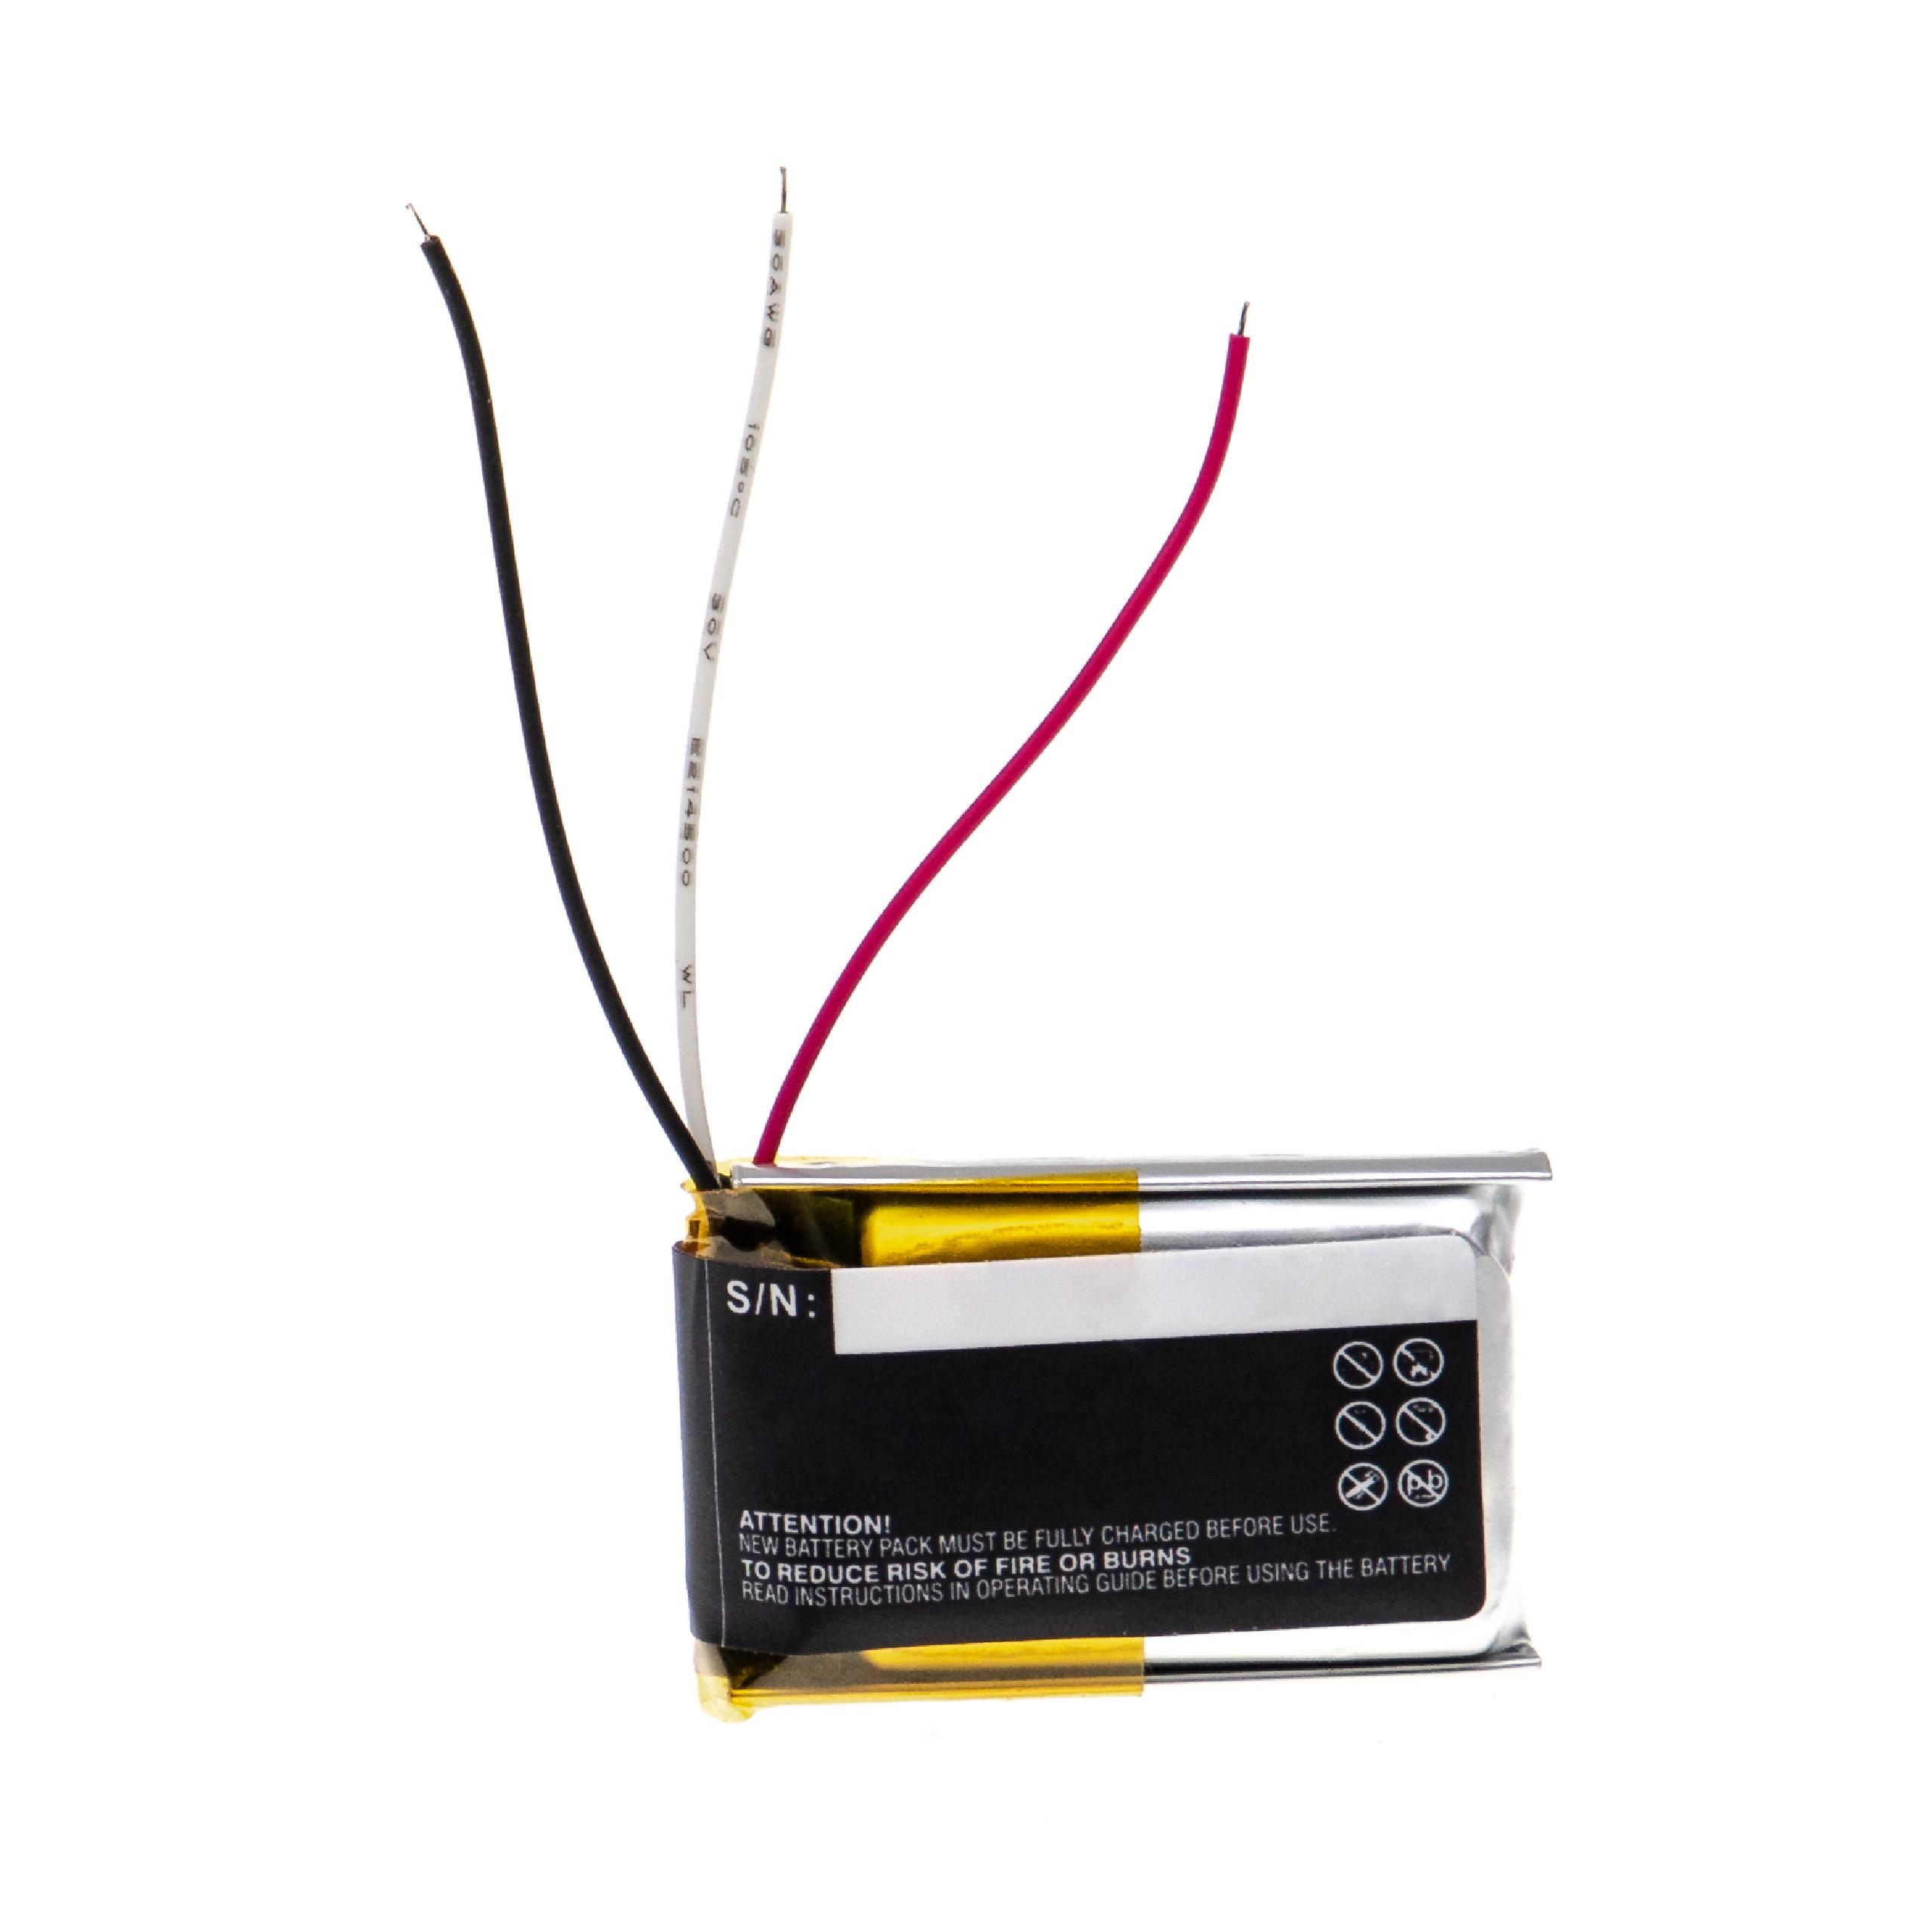 Wireless Headset Battery Replacement for Skullcandy FT822132P - 400mAh 3.7V Li-polymer